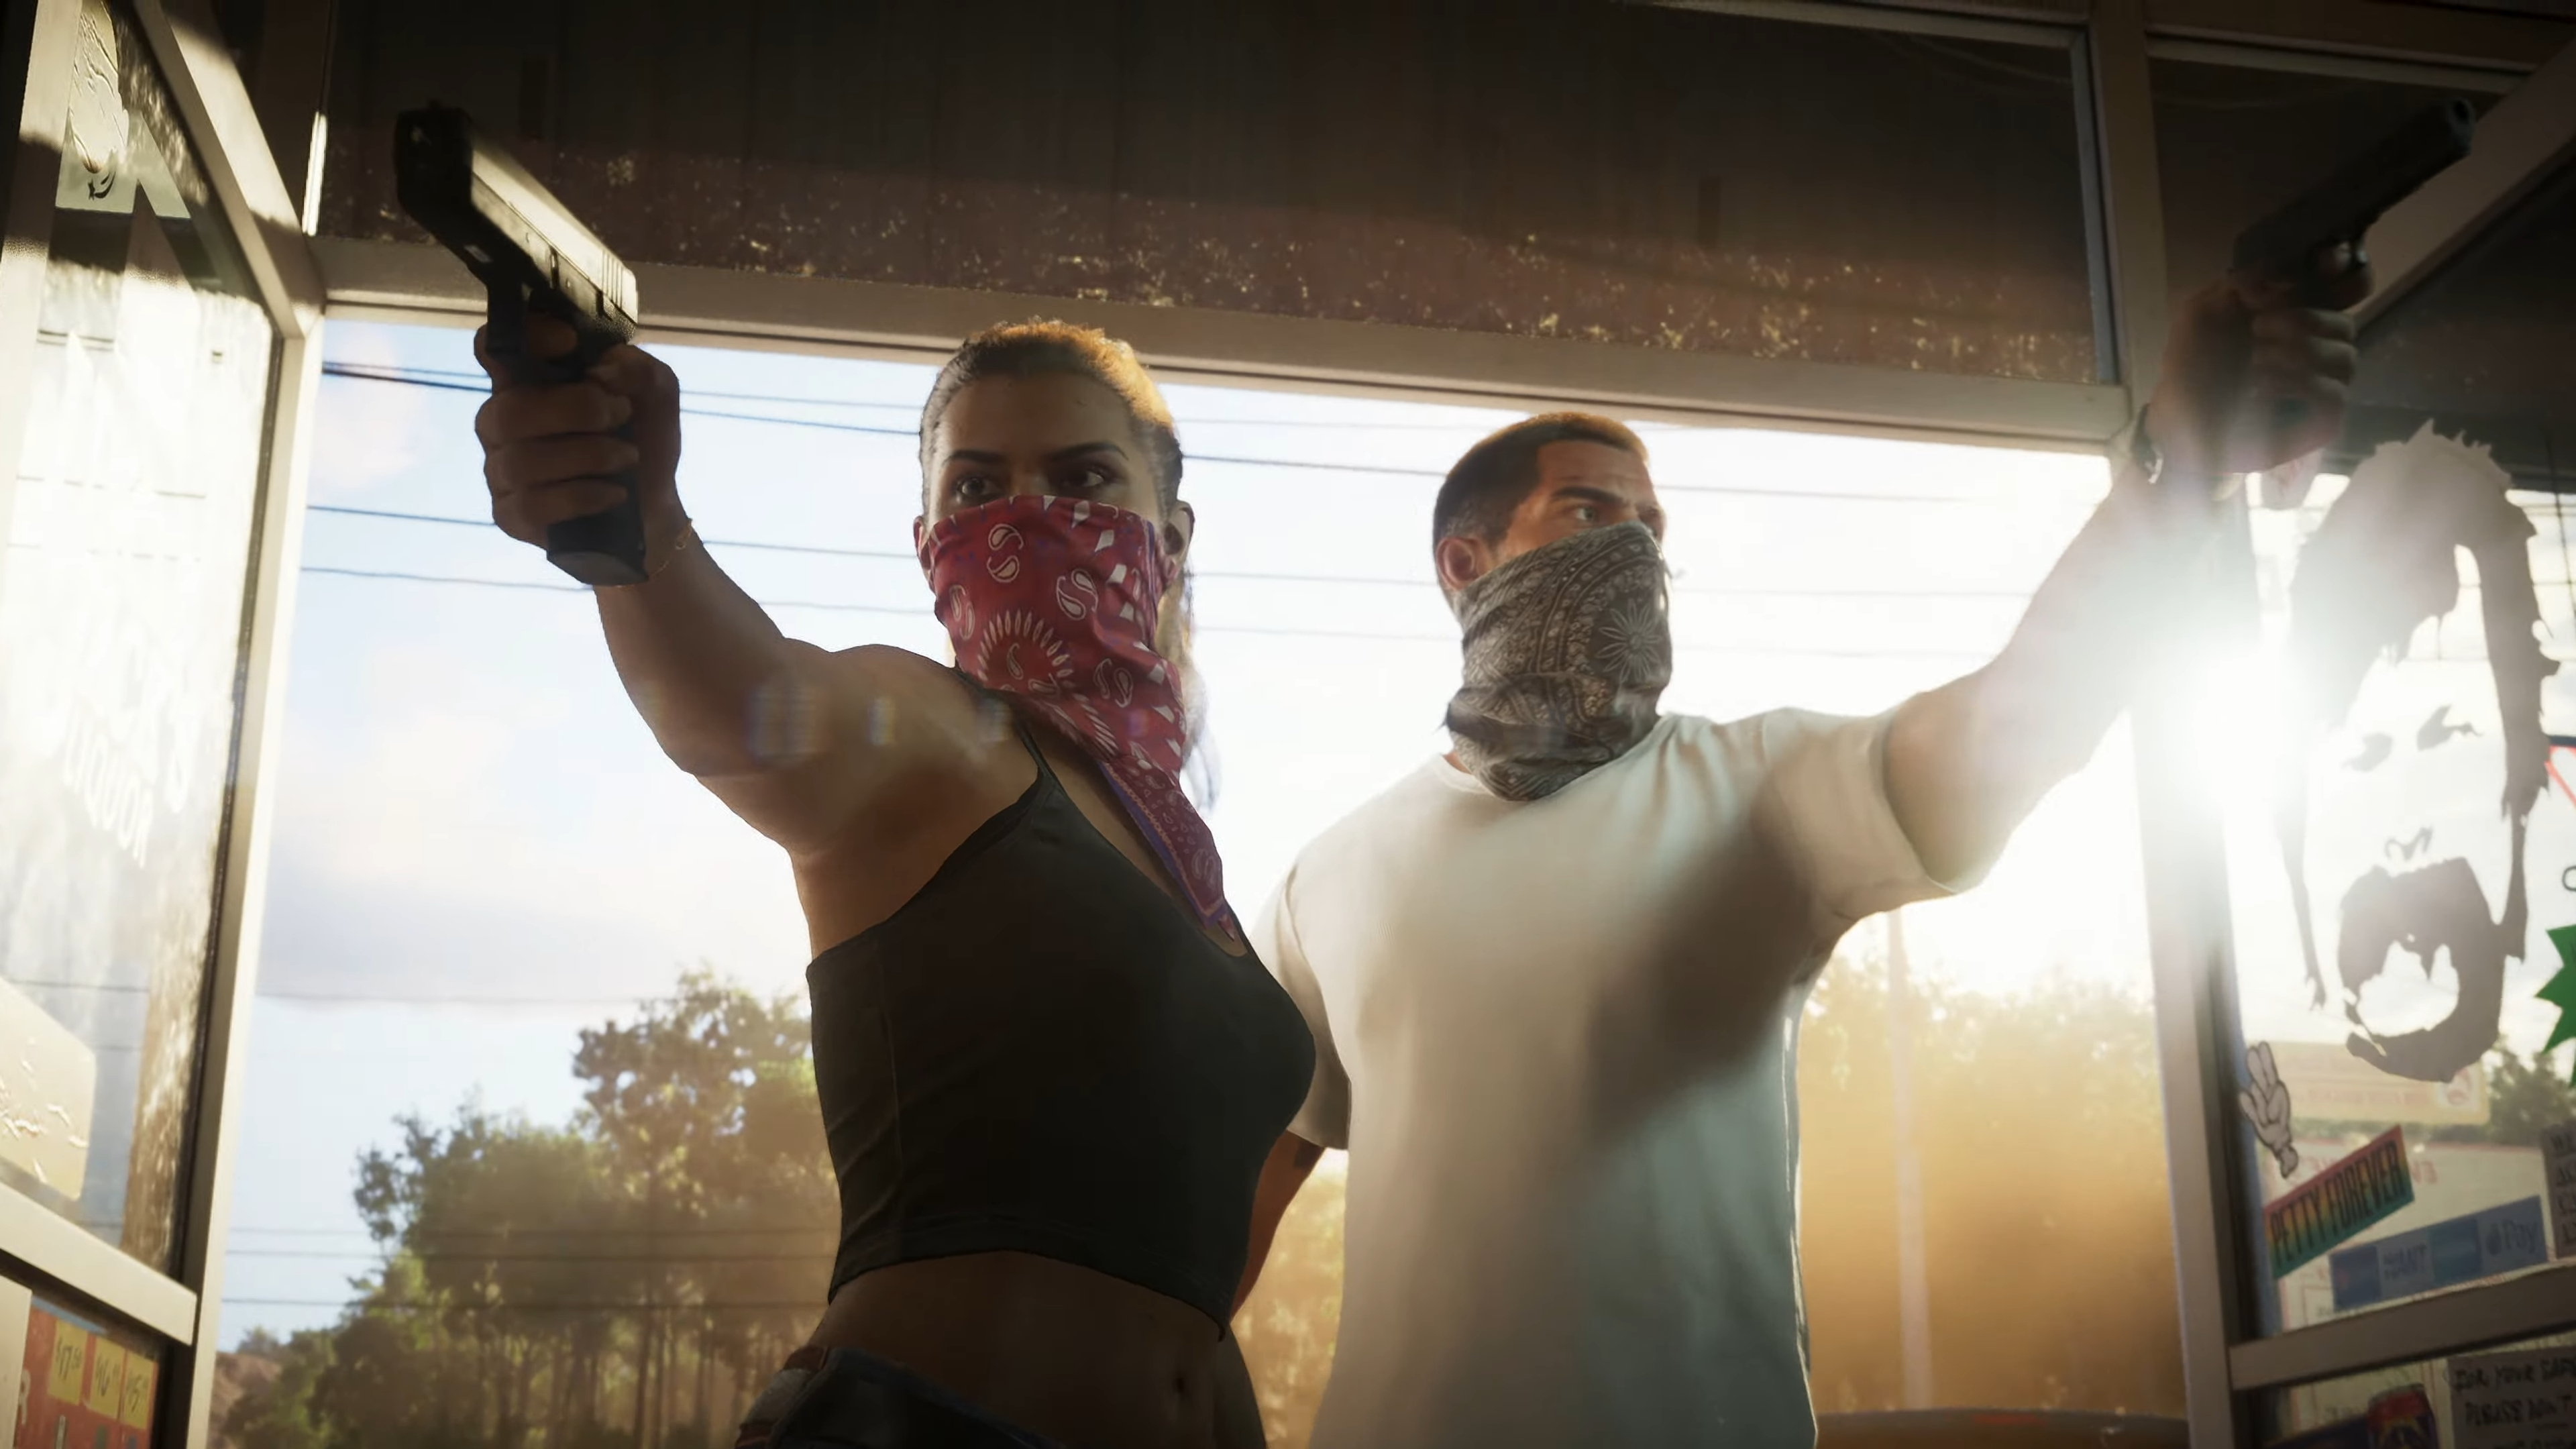 Rockstar Games' GTA 6 Trailer Tweet Becomes the Most Liked Gaming